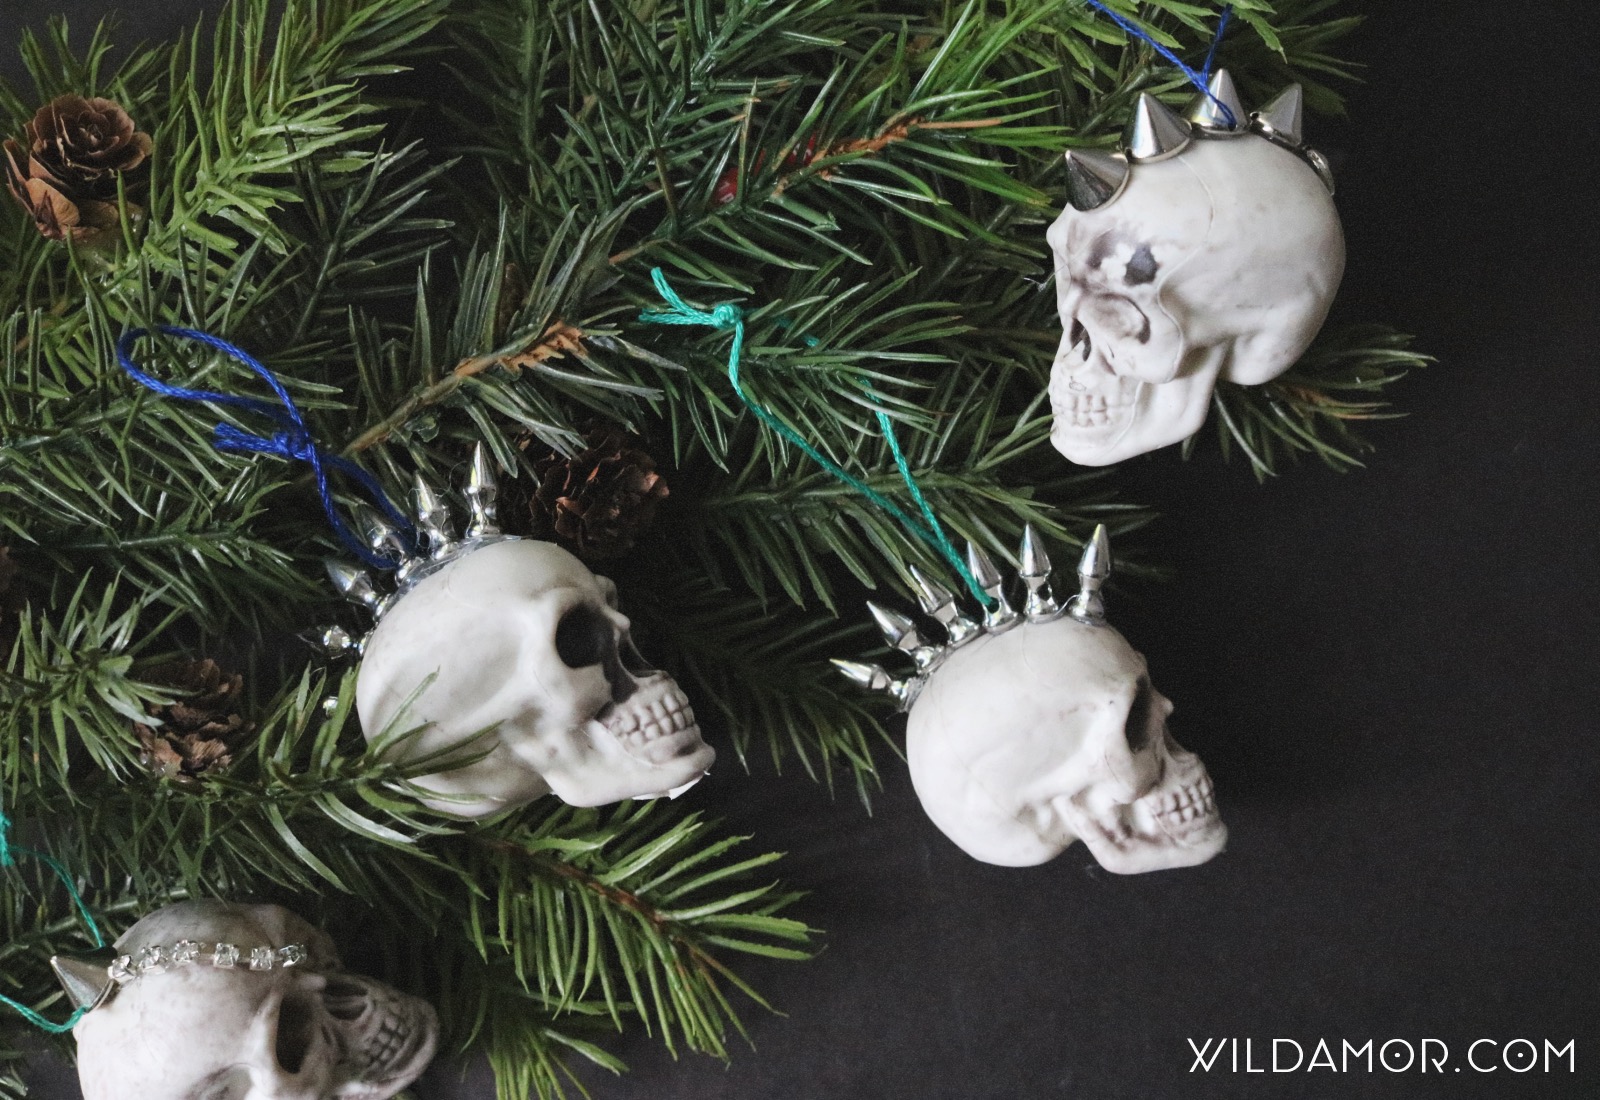 DIY Studded Mohawk Skull Ornaments